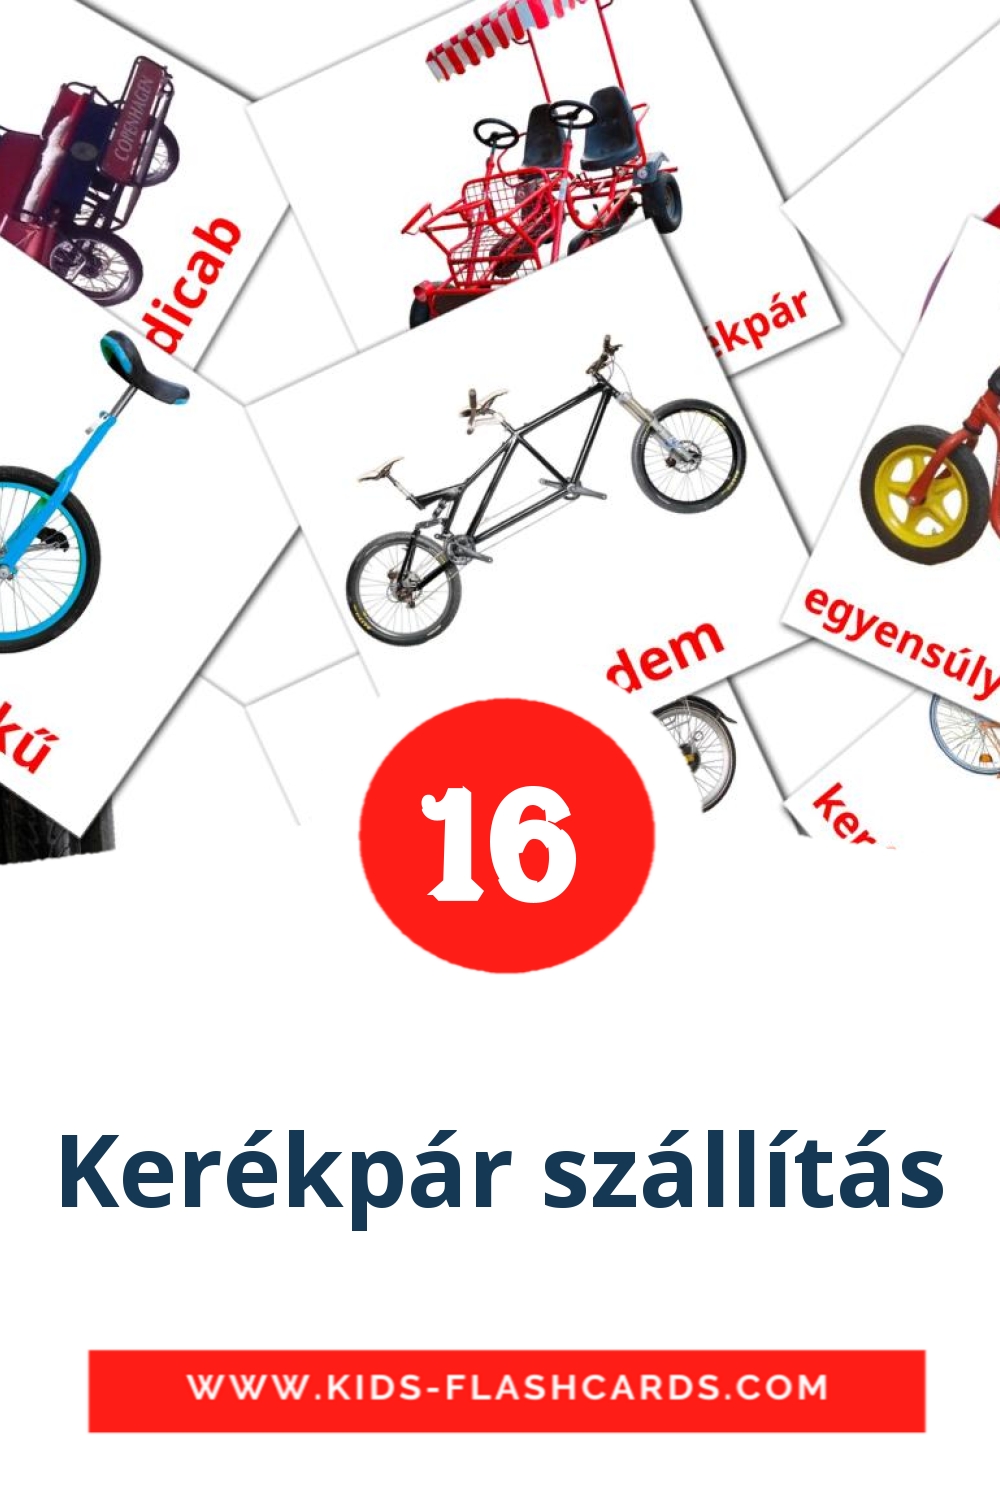 16 Kerékpár szállítás Picture Cards for Kindergarden in hungarian